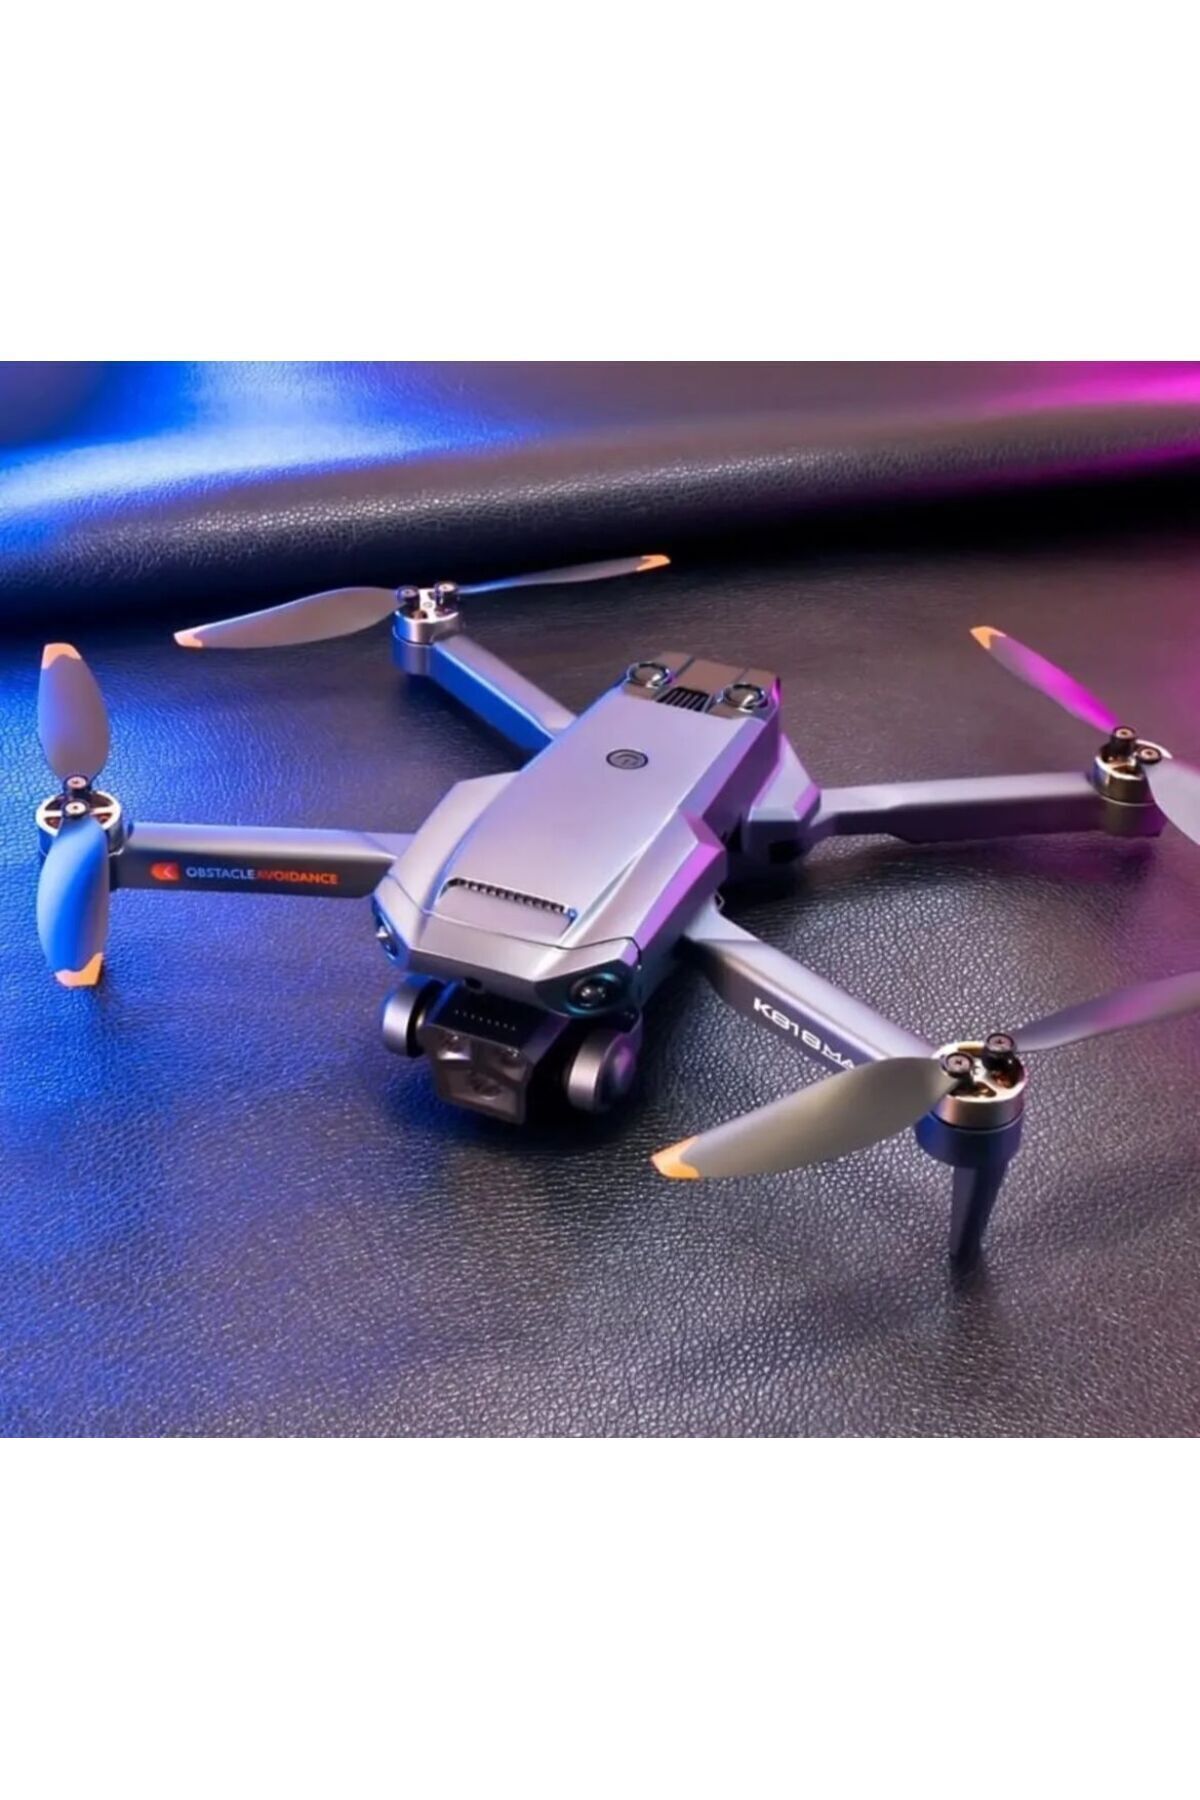 DroneEm x K819 Max Fly Combo Drone Gps 3 Batarya Taşıma Çantası